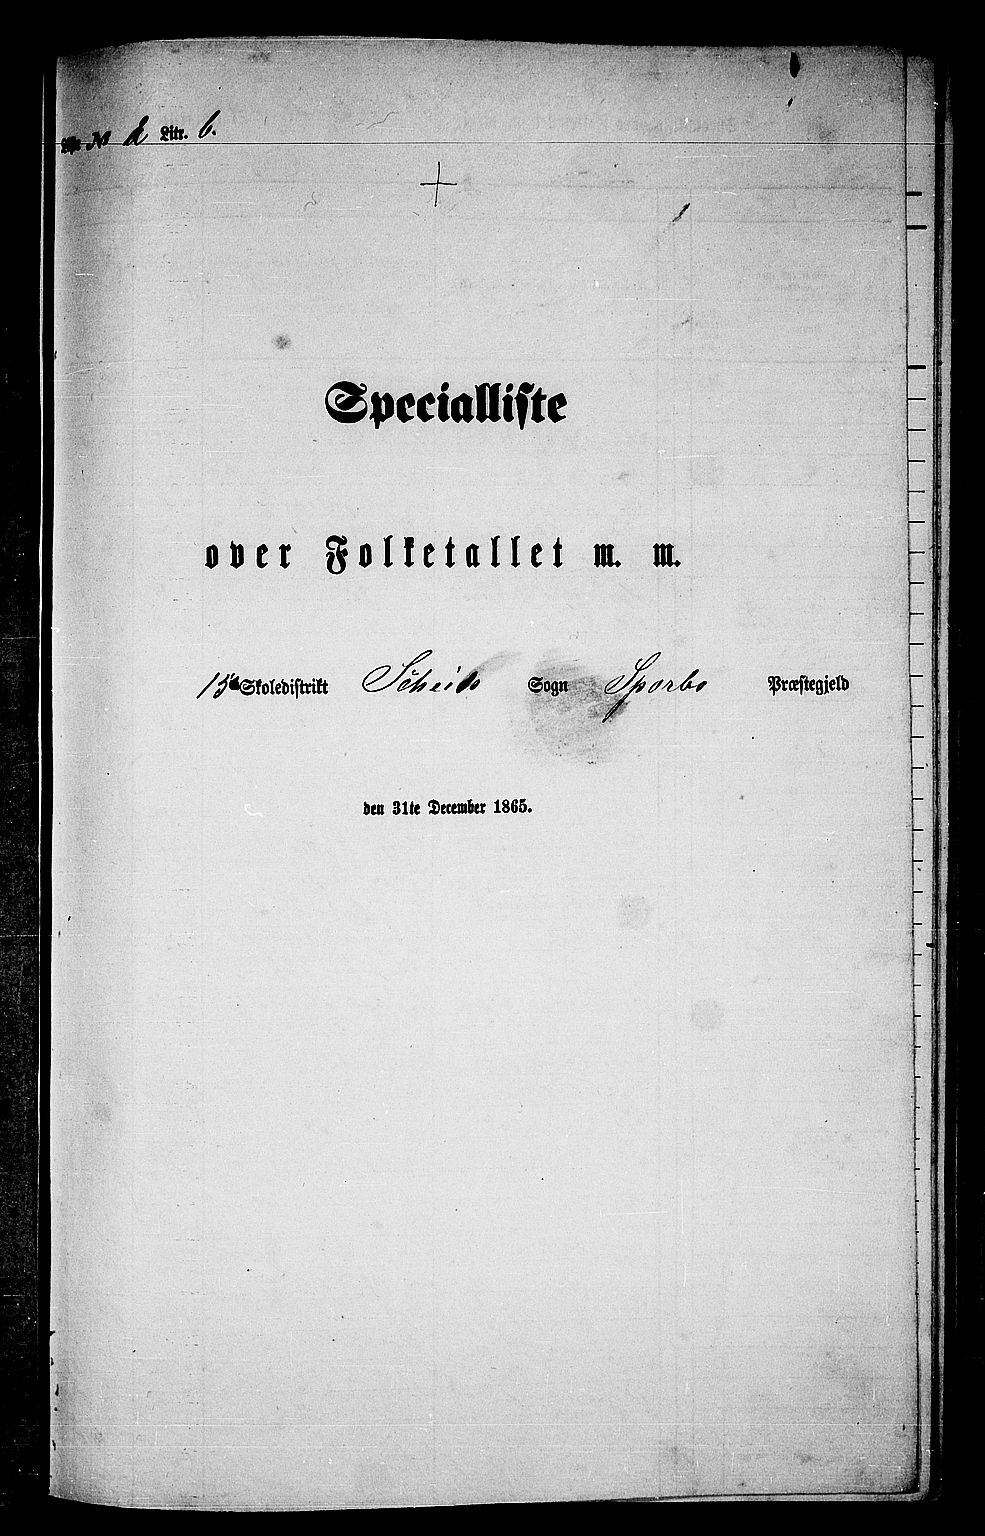 RA, Folketelling 1865 for 1731P Sparbu prestegjeld, 1865, s. 45